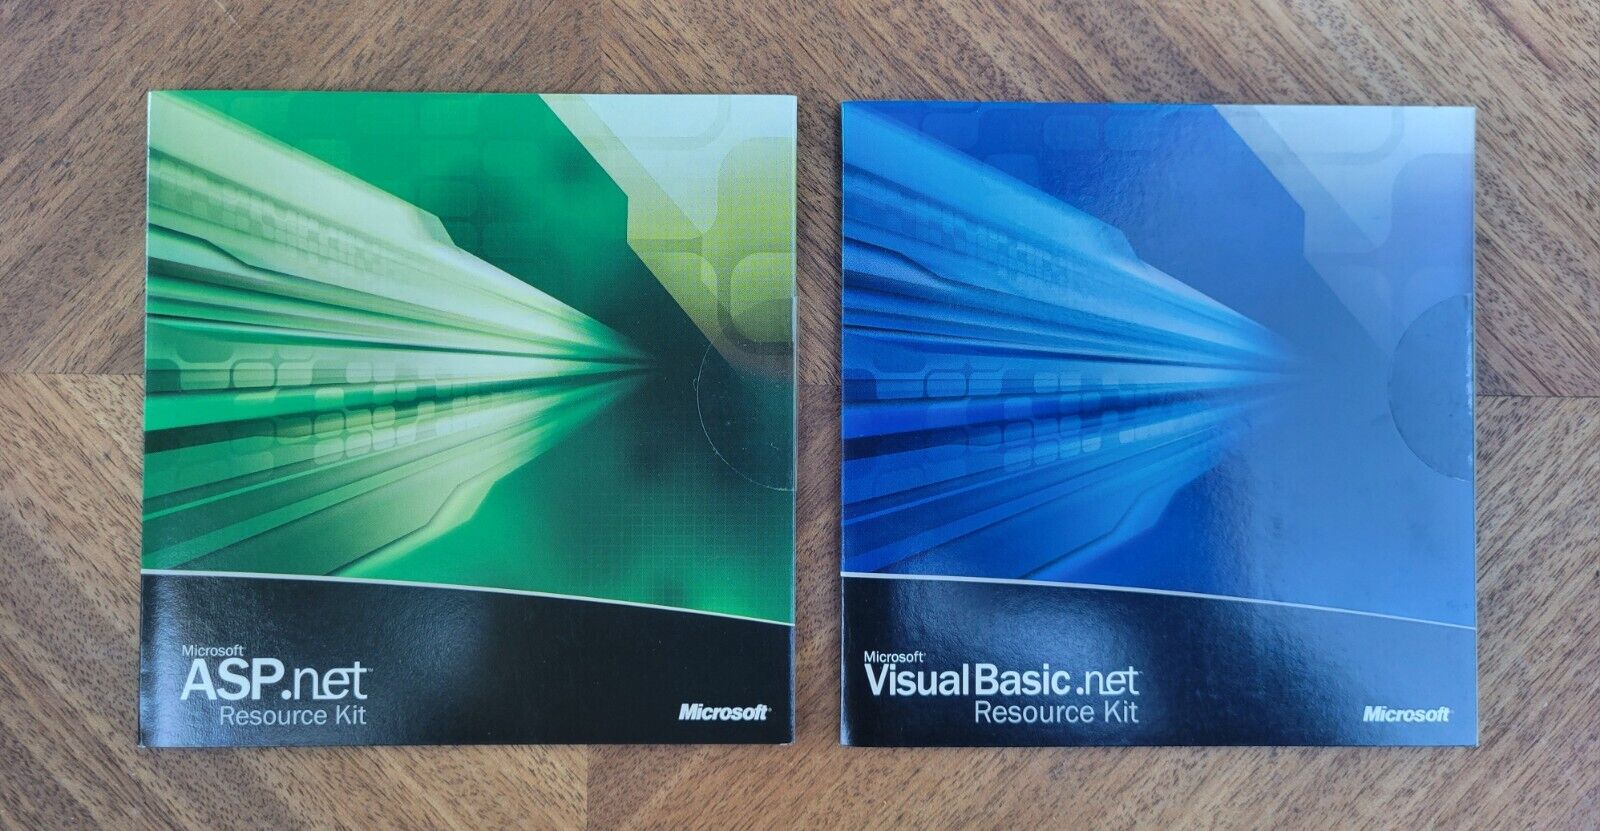 New 2004 Microsoft ASP.net Resource Kit CD ROM & Visual Basic CD